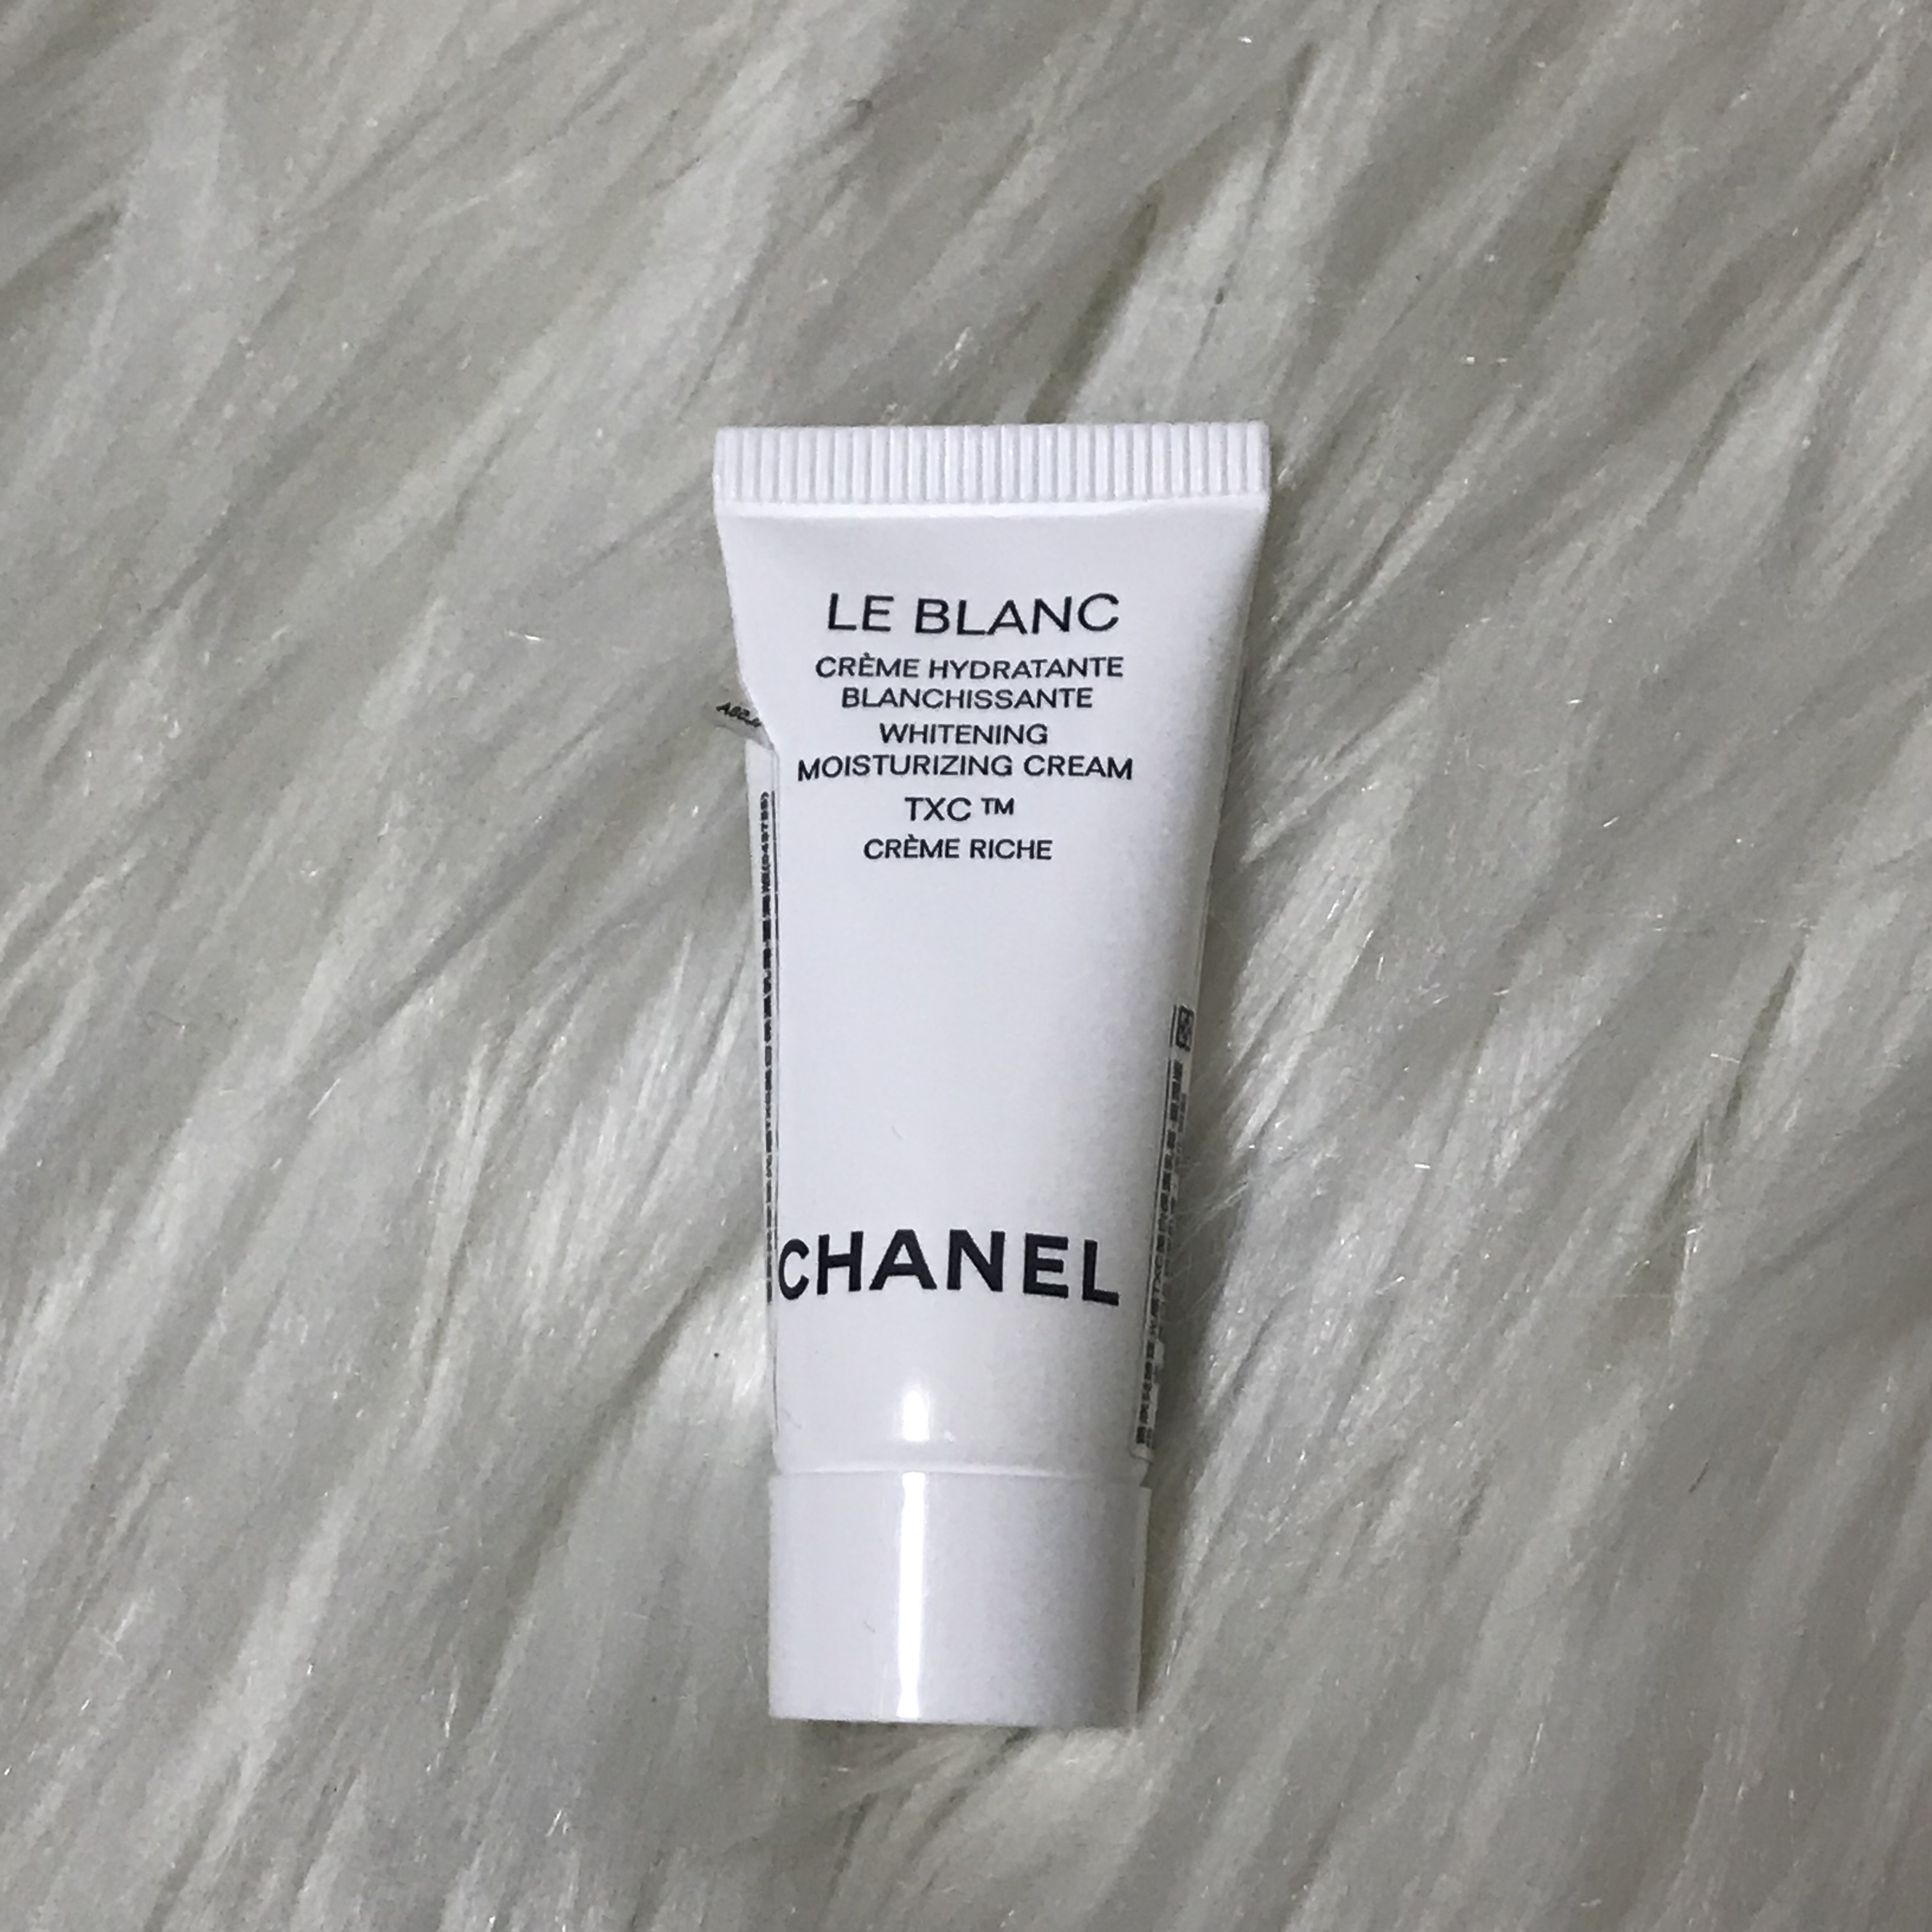 CHANEL LE BLANC Brightening Moisturizing Cream trial si